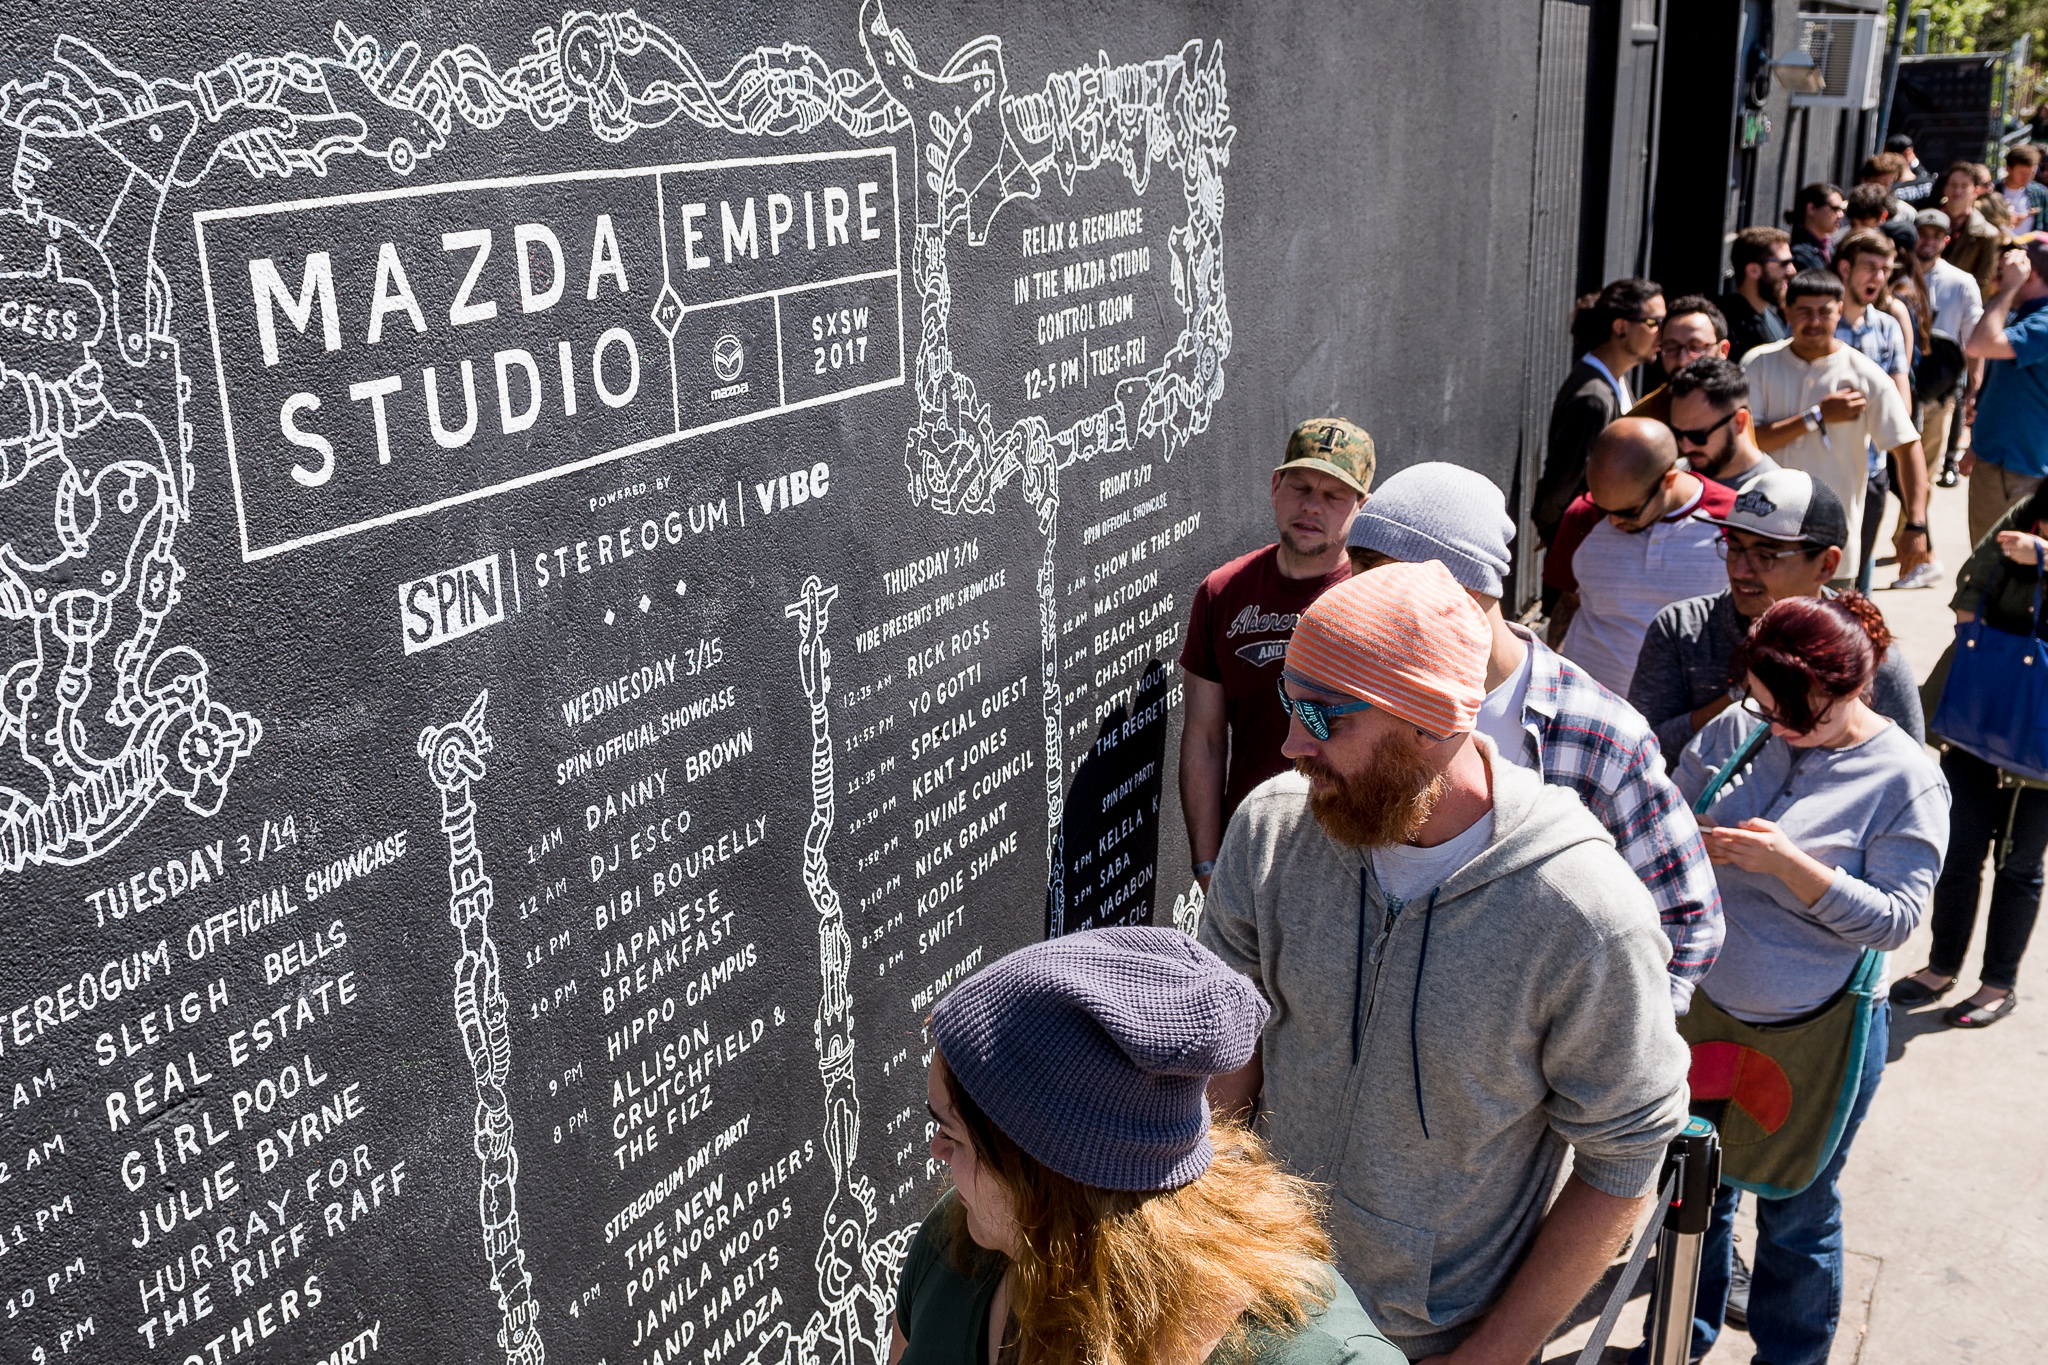 SXSW 2017 Gallery: Behind the Scenes at Mazda Studio at Empire